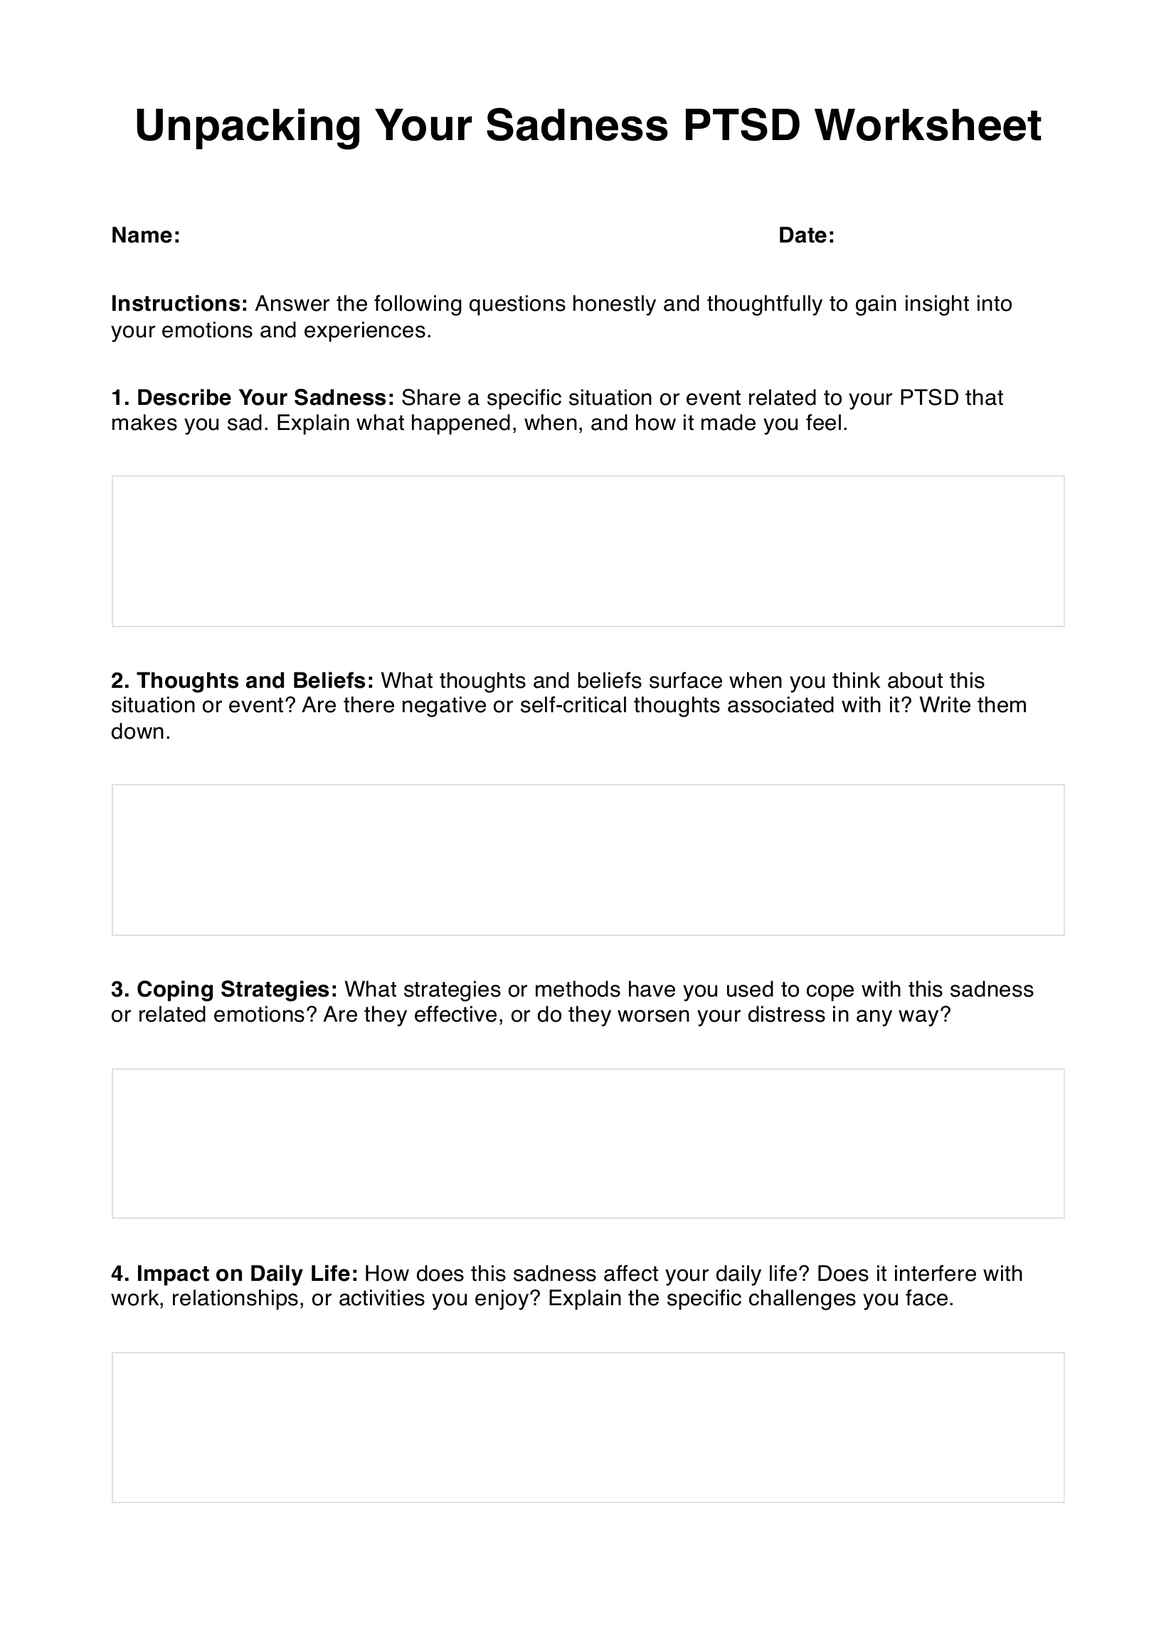 Unpacking Your Sadness PTSD Worksheet PDF Example